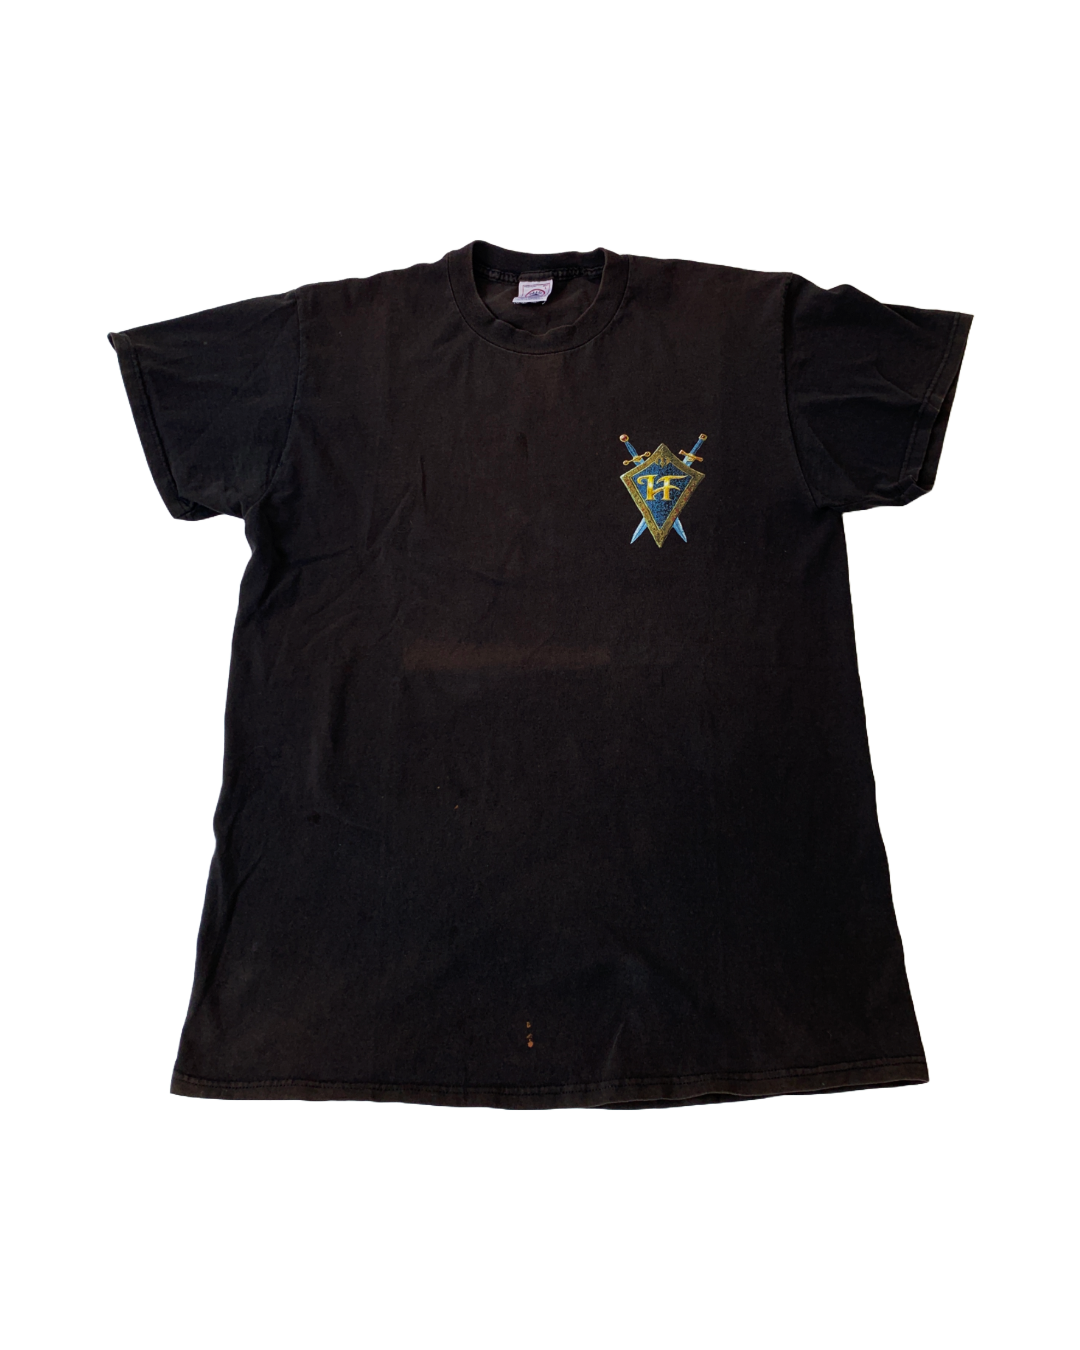 HammerFall 1999 Vintage Tour T-Shirt - L